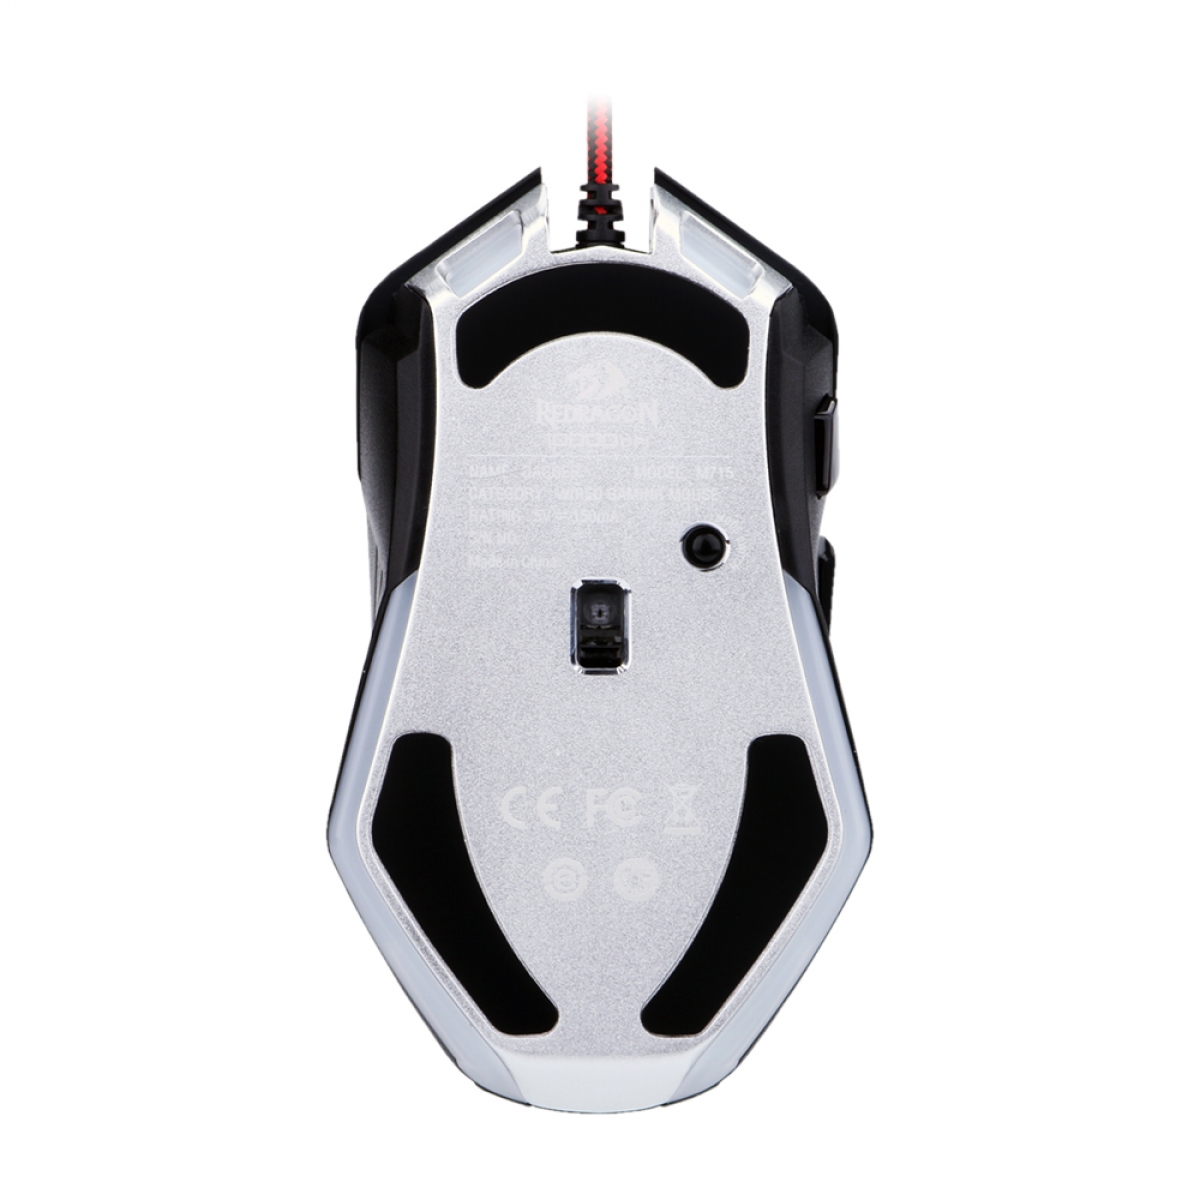 Mouse Gamer Redragon Dagger Chroma M715 RGB, 10000 DPI, 7 Botões Programáveis, Black